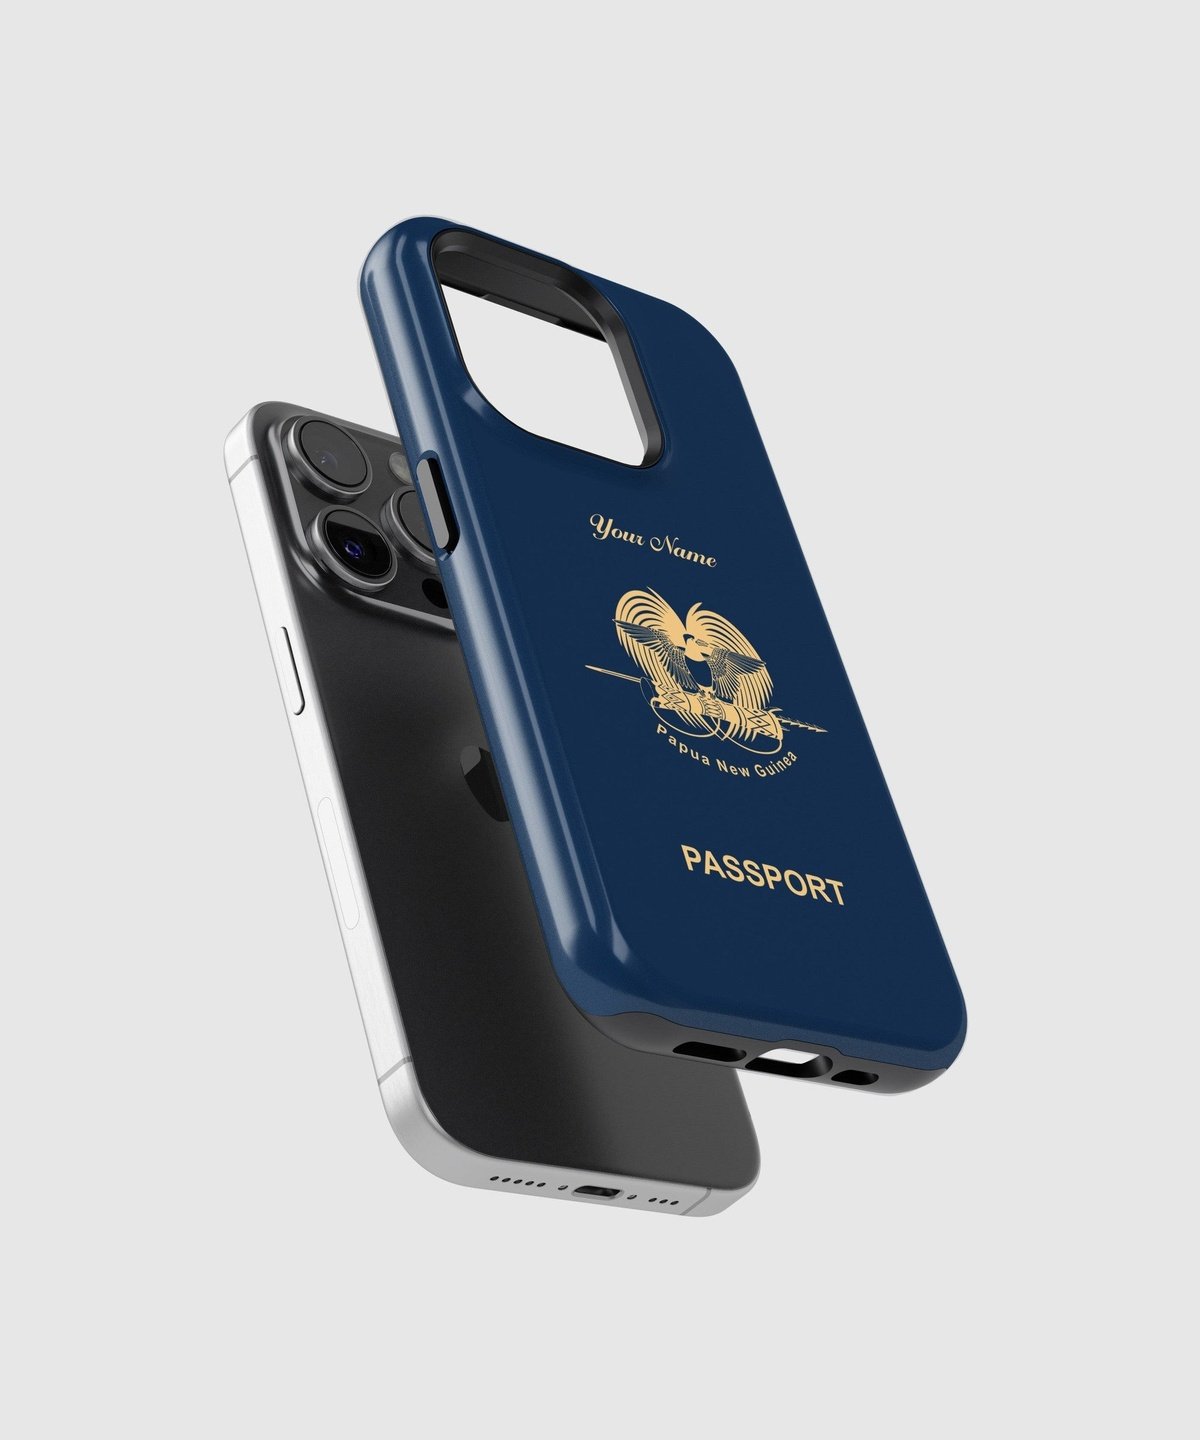 Papua New Guinea Passport - iPhone Case